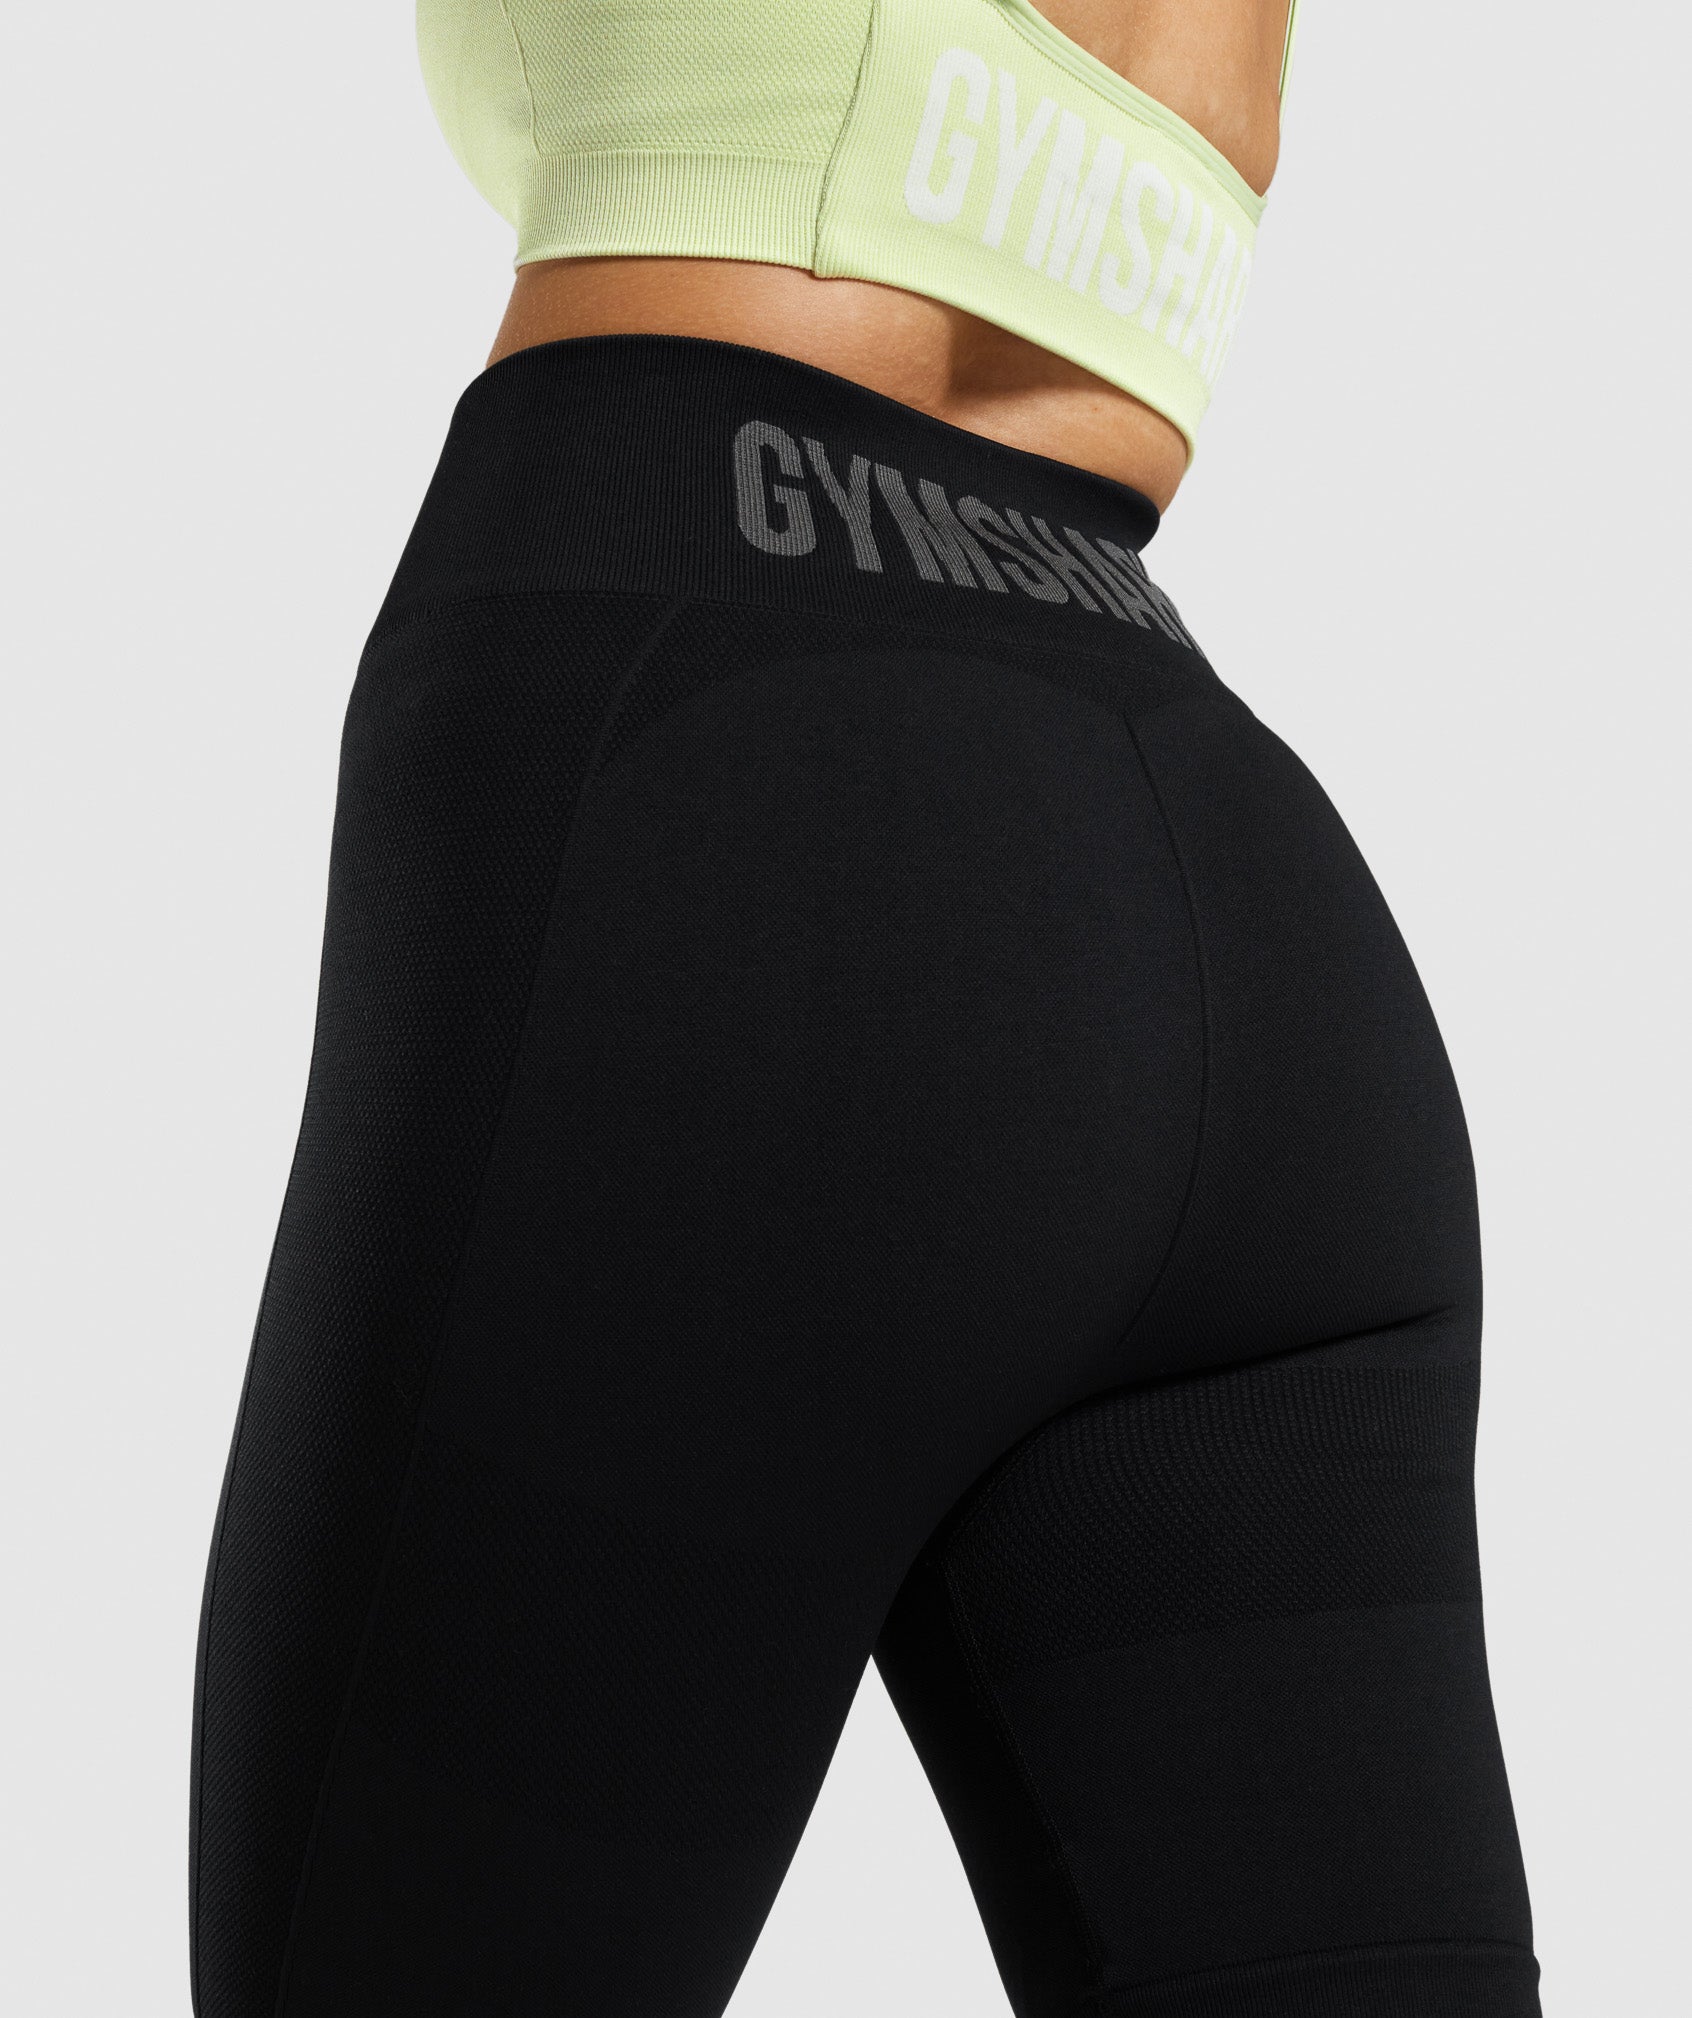 Gymshark Women's Activewear for sale in Venice Beach, Florida, Facebook  Marketplace